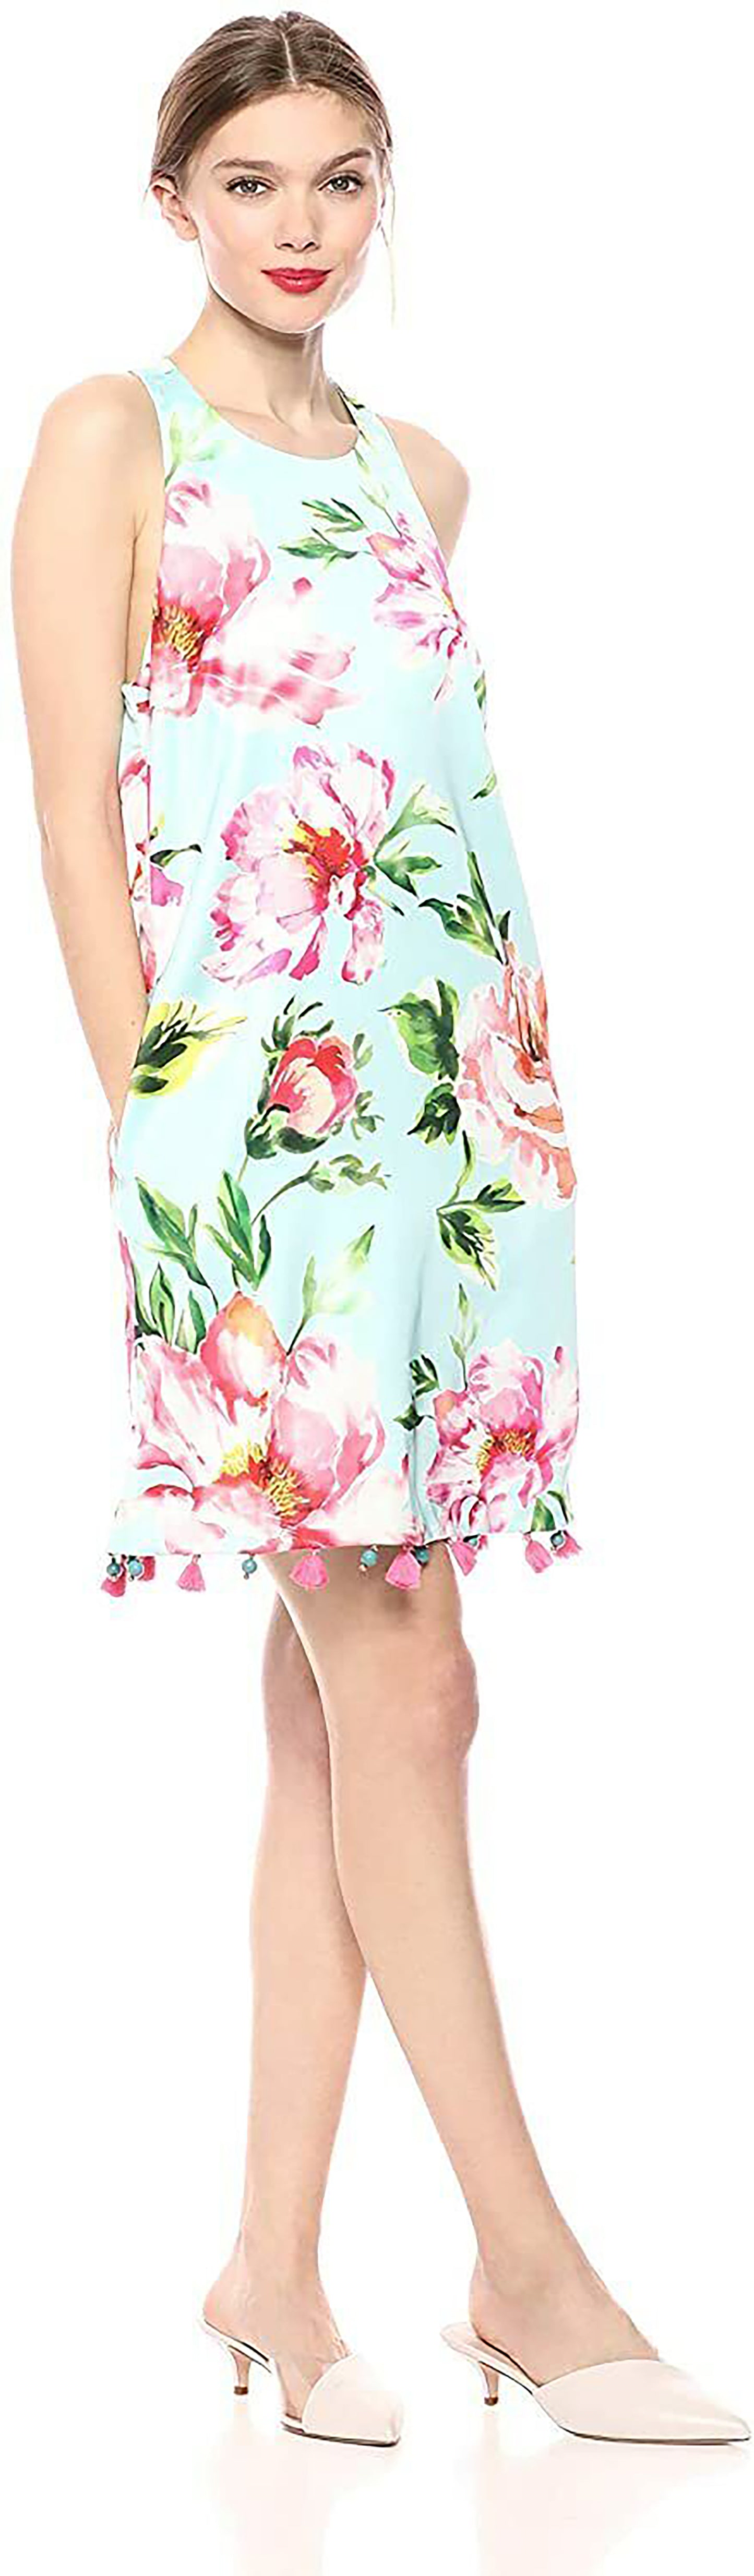 LAUNDRY BY SHELLI SEGAL Women's Aqua Fringed Floral Sleeveless Jewel Neck Dress Size 4